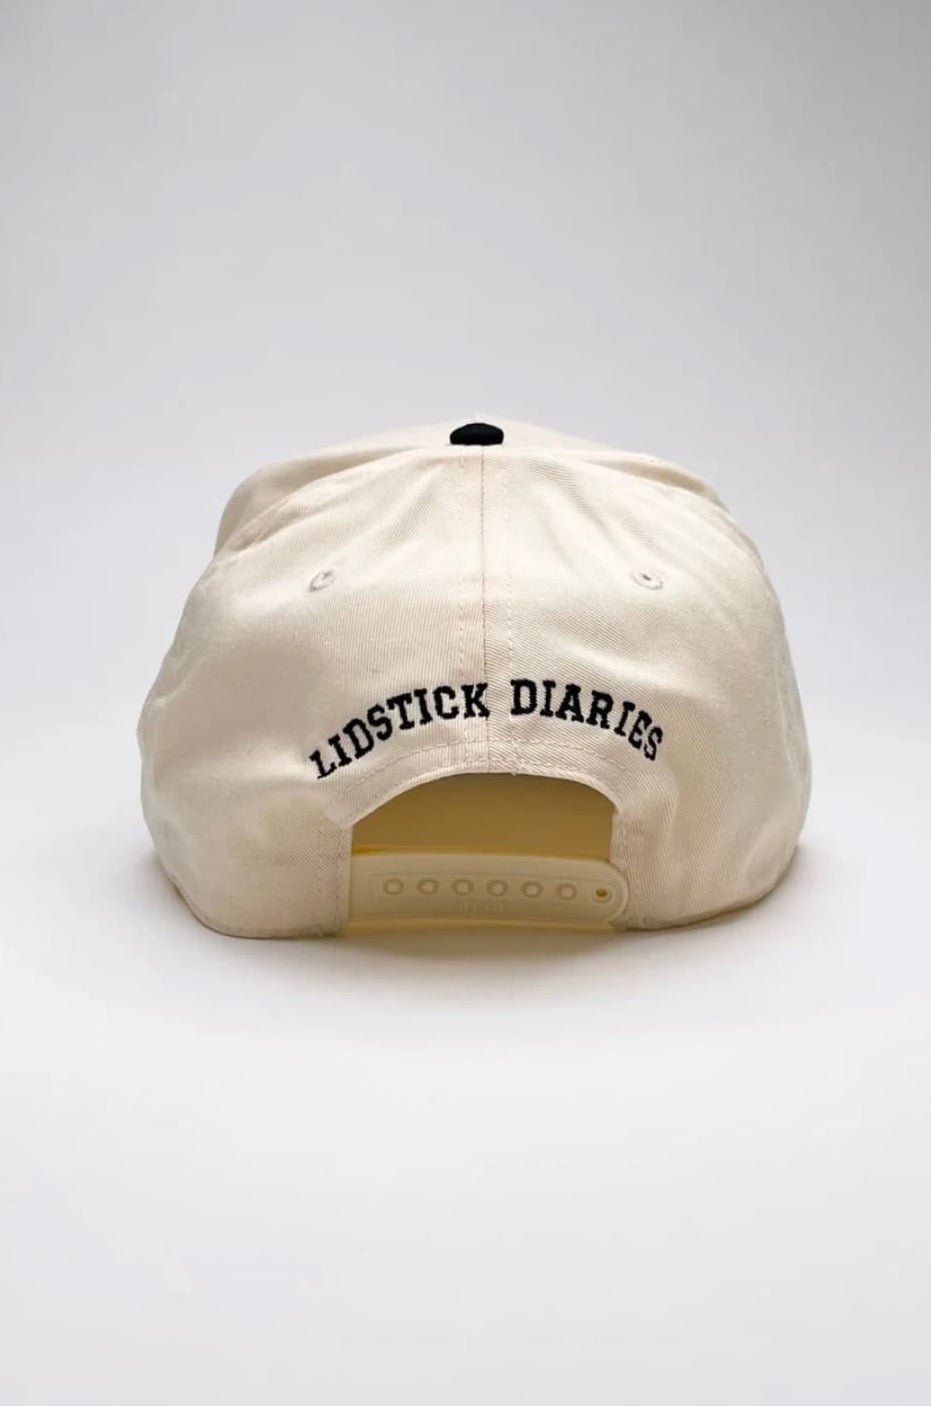 Los Angeles Rebel Baseball Cap (Natural/Green) - Hat